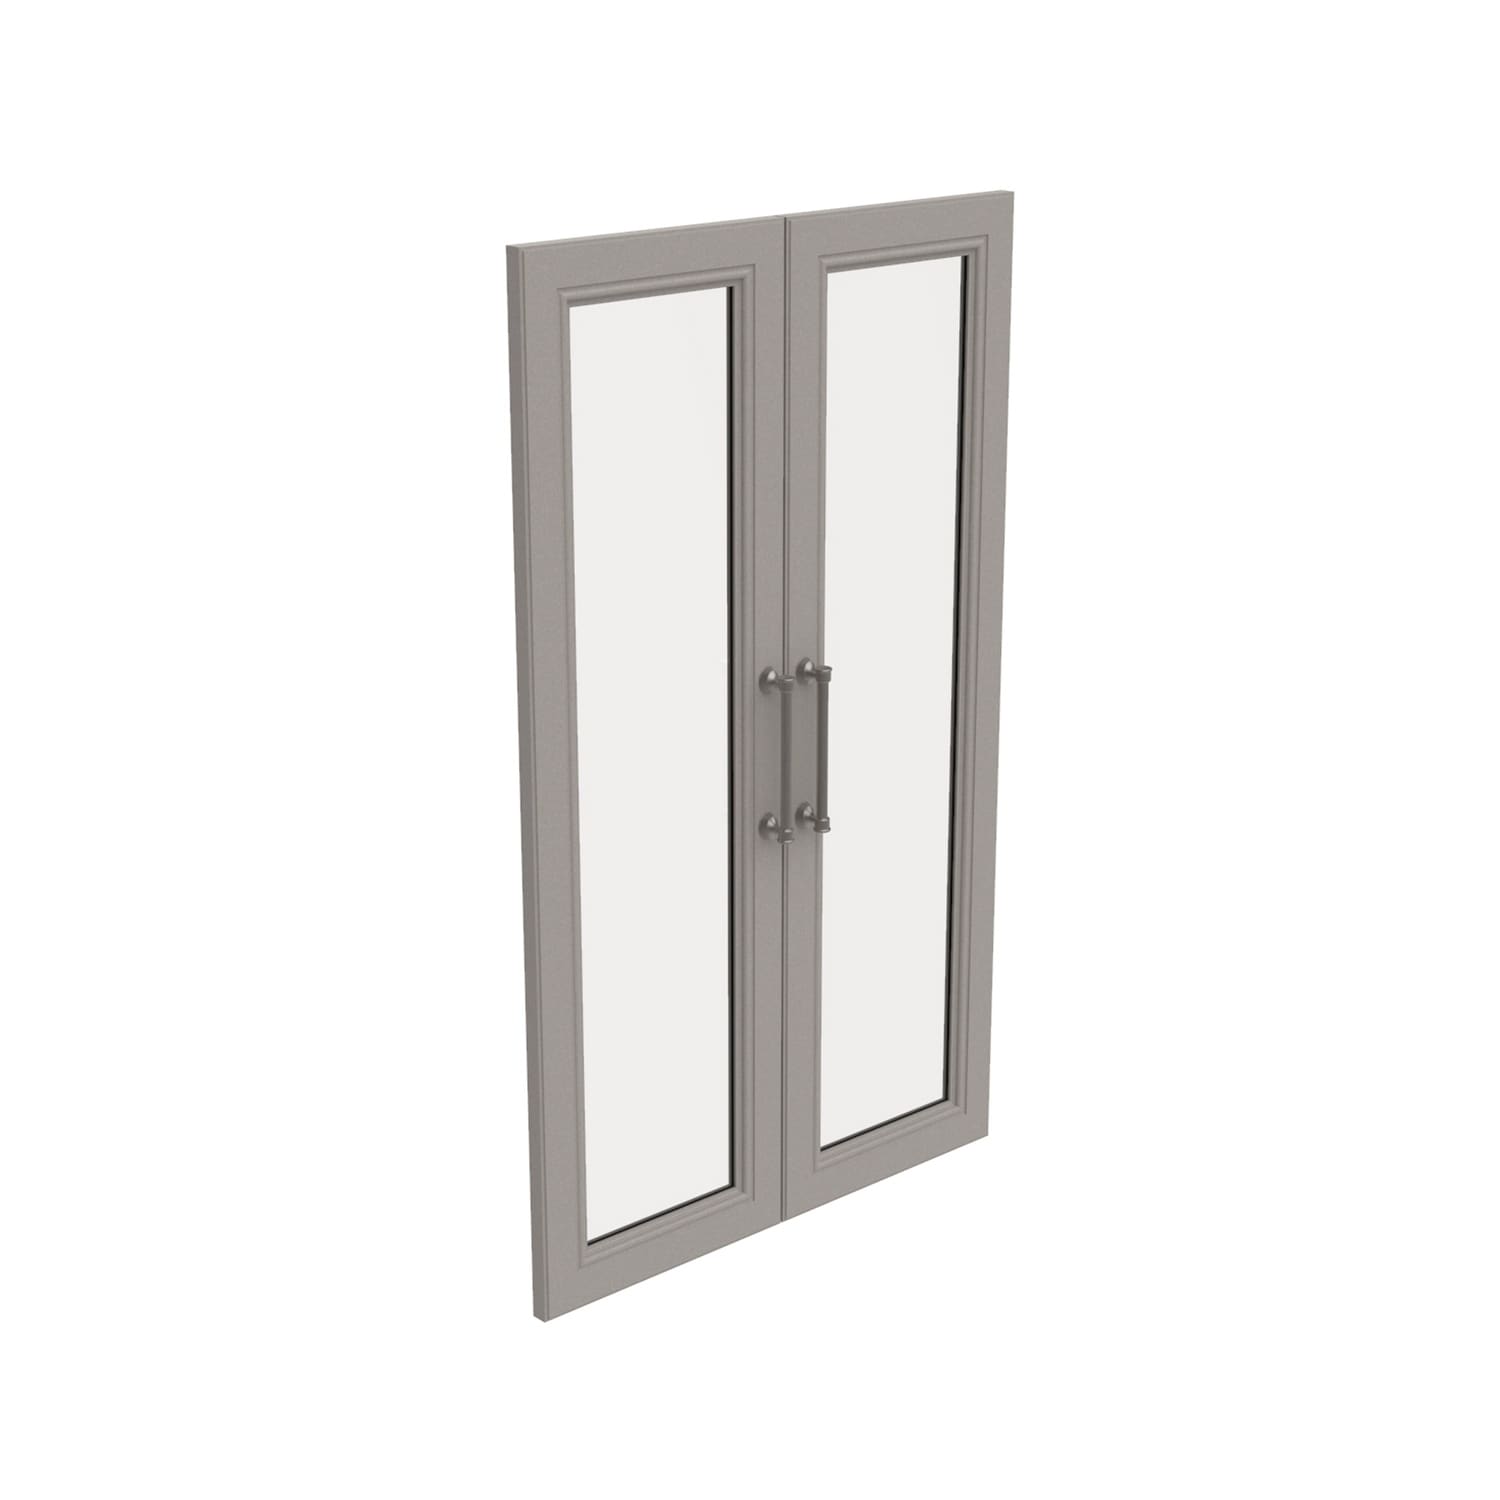 https://ak1.ostkcdn.com/images/products/is/images/direct/fbb7ef65d3f59cac0dfbba6b1cb79a25ae2209b8/ClosetMaid-Modular-Closet-Glass-Door-Pair-Kit.jpg